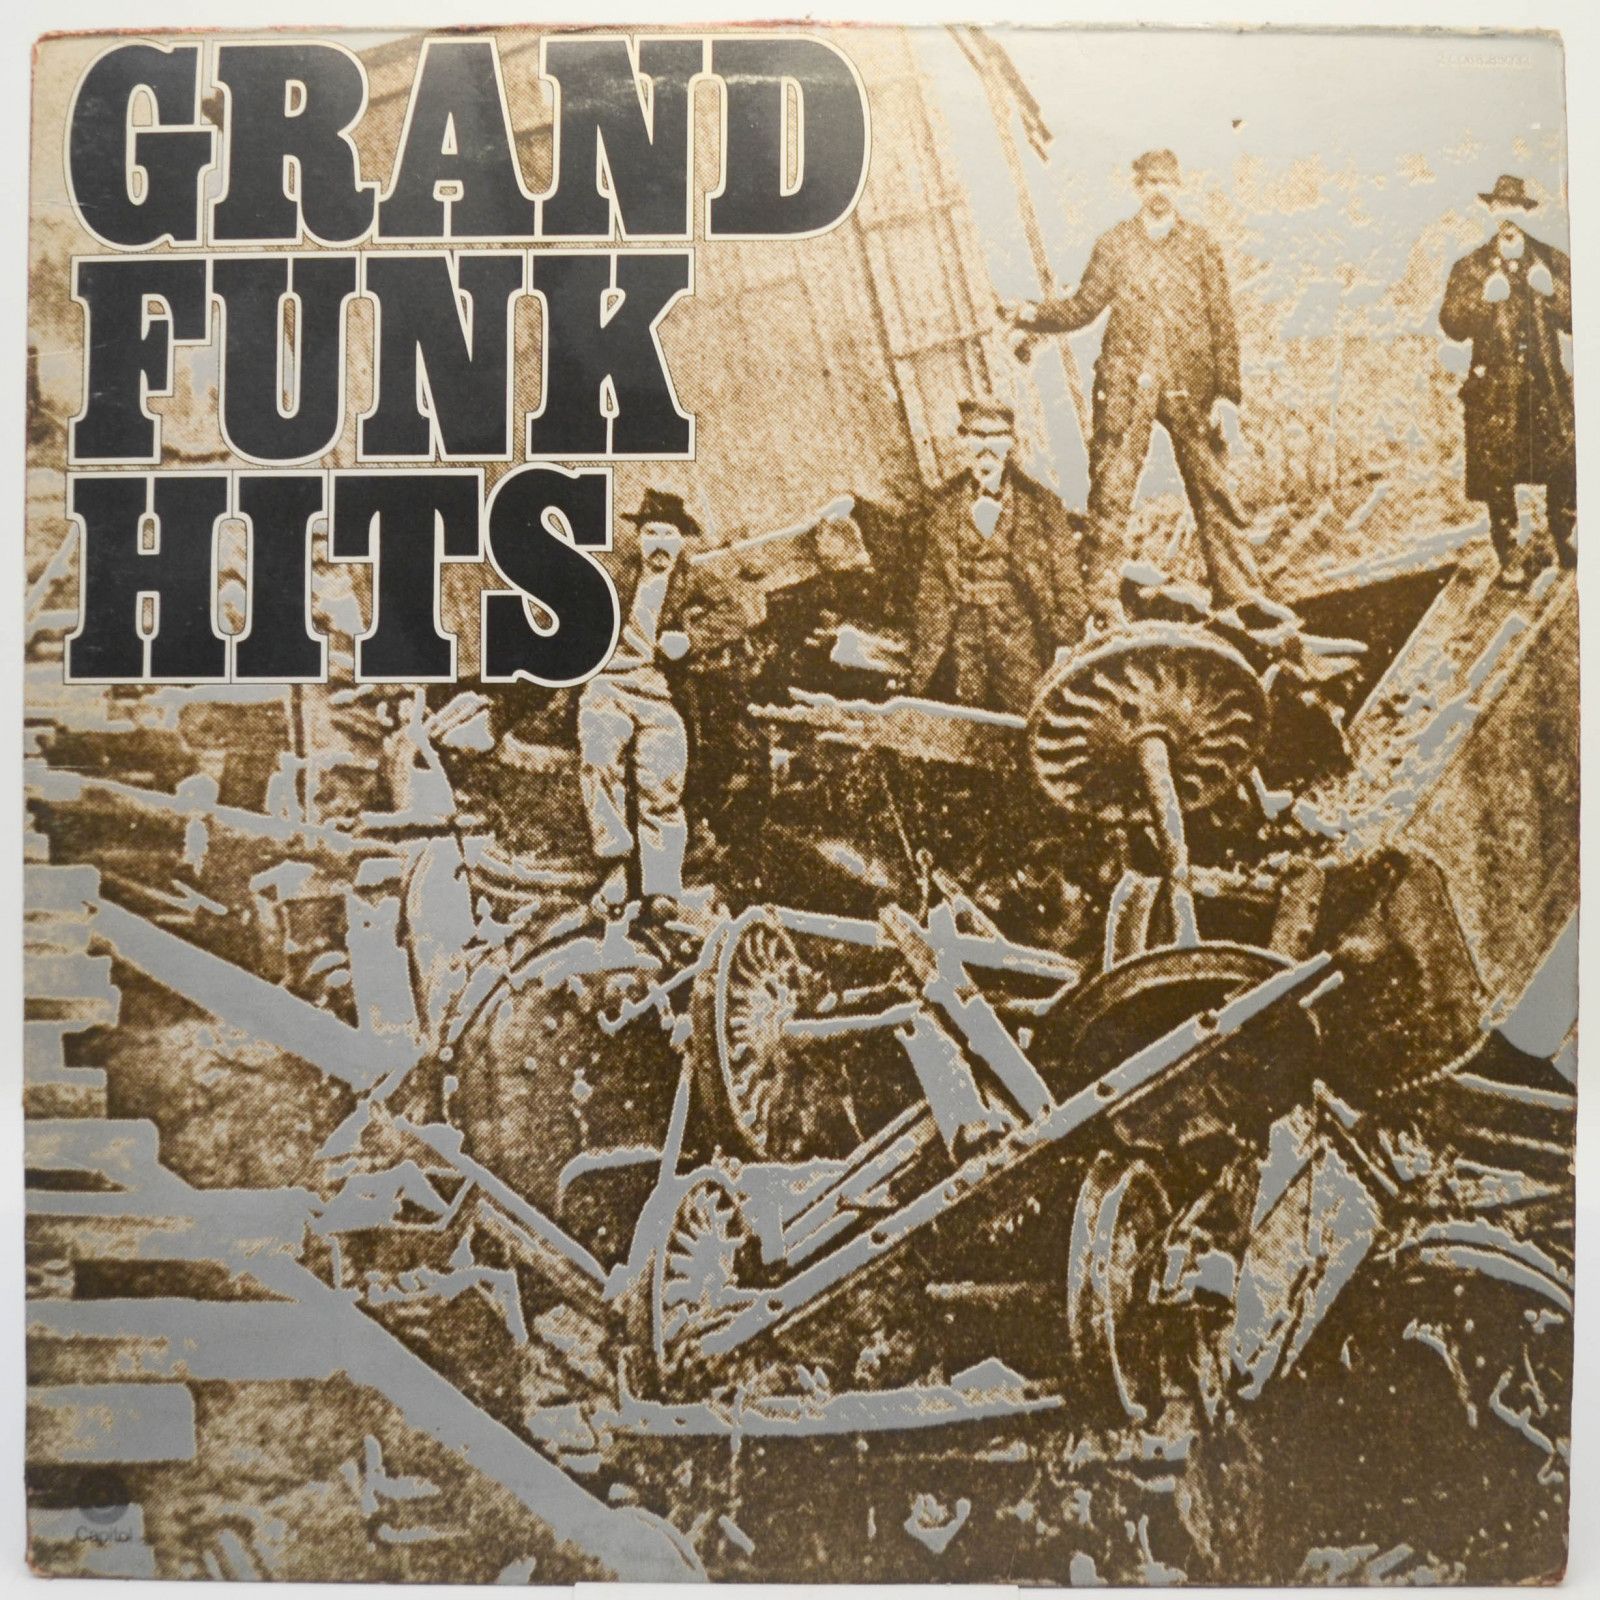 Grand Funk Railroad — Grand Funk Hits, 1976